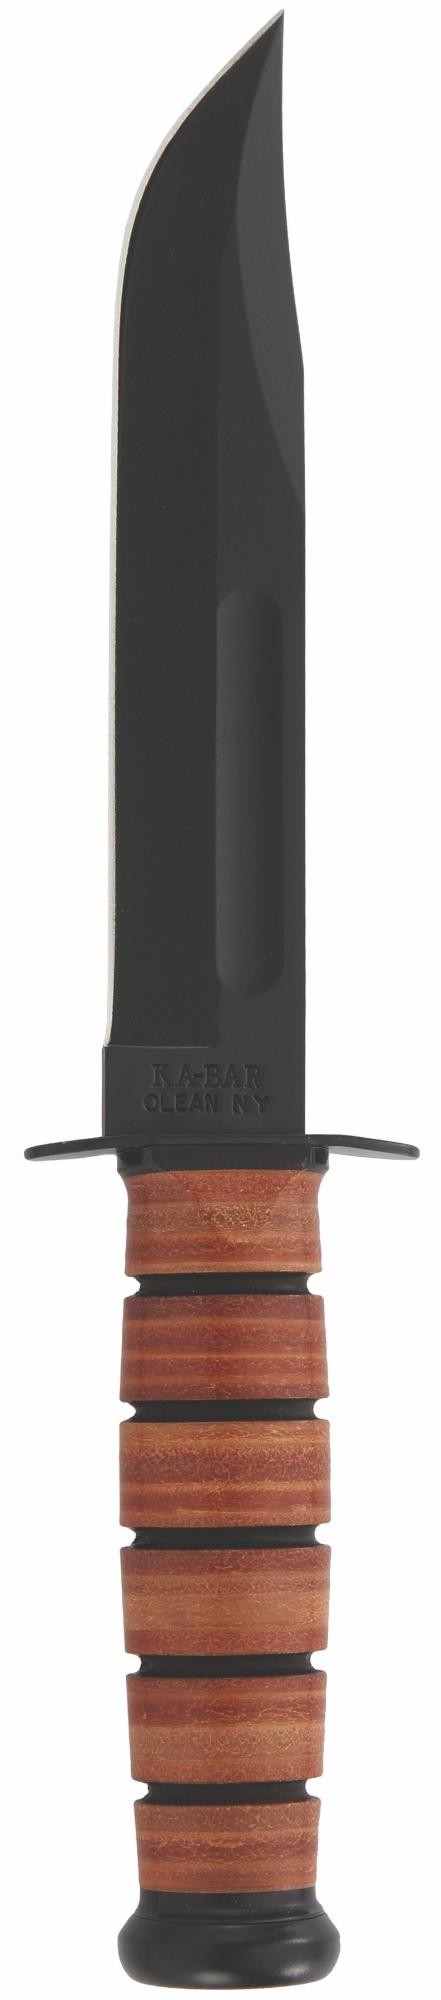 KA-BAR® Full Size with leather Handle (5017)